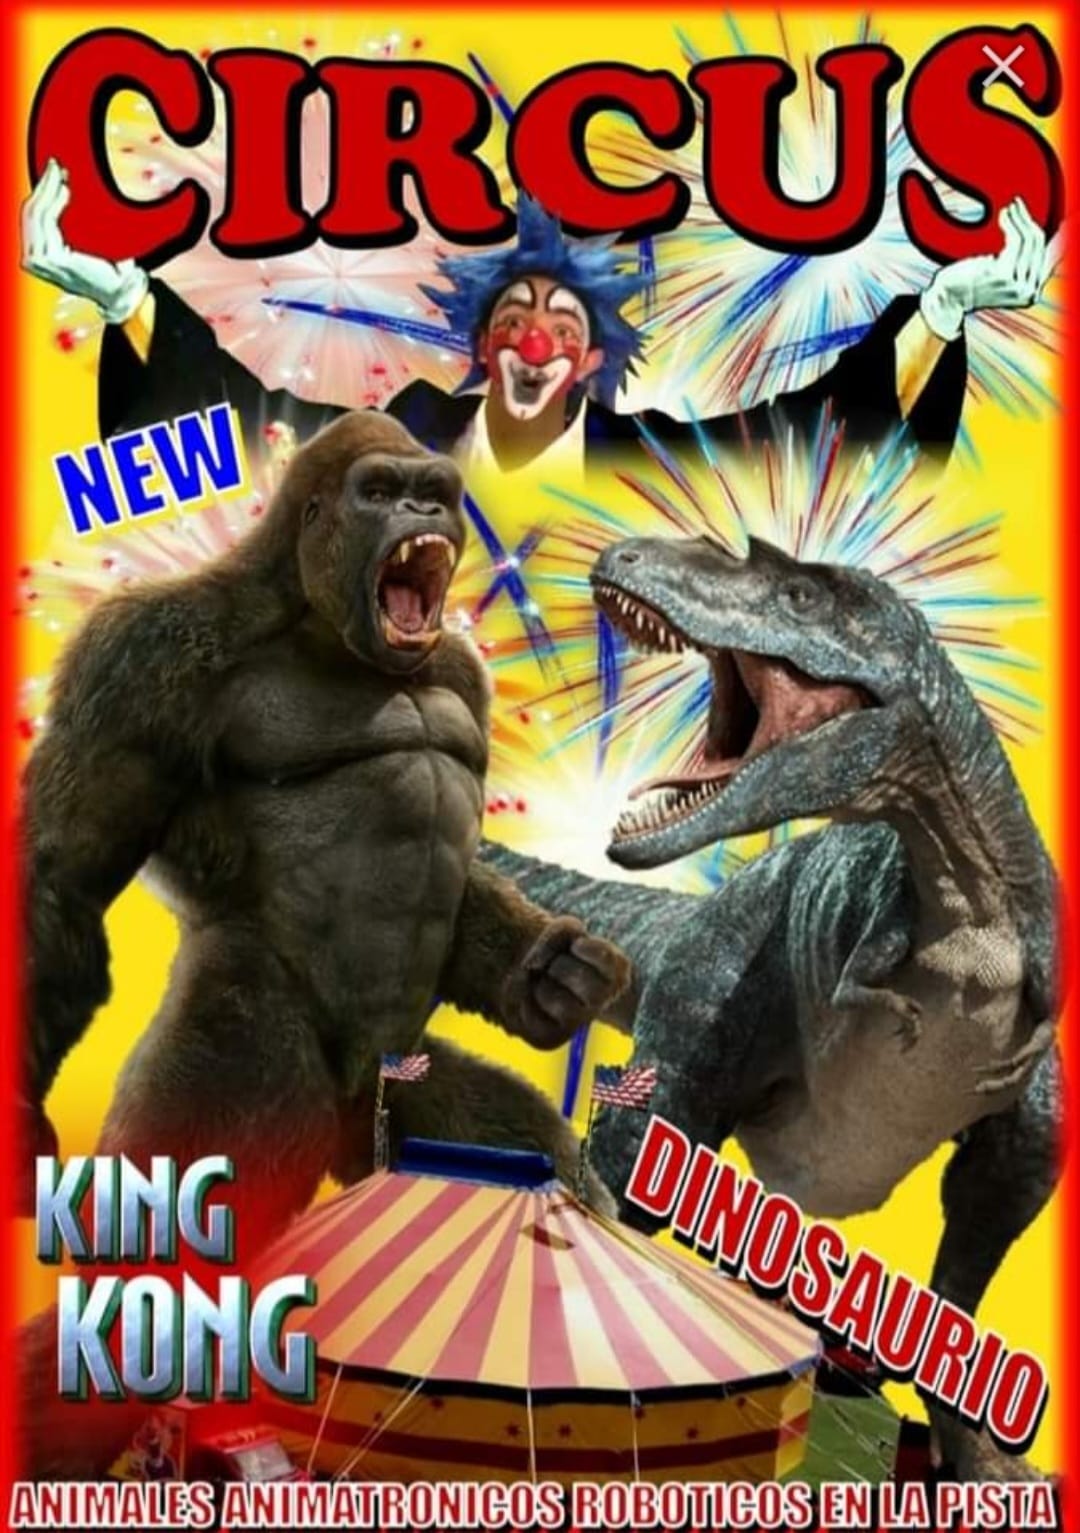 Cartel King kong y dinosaurios animatrónic